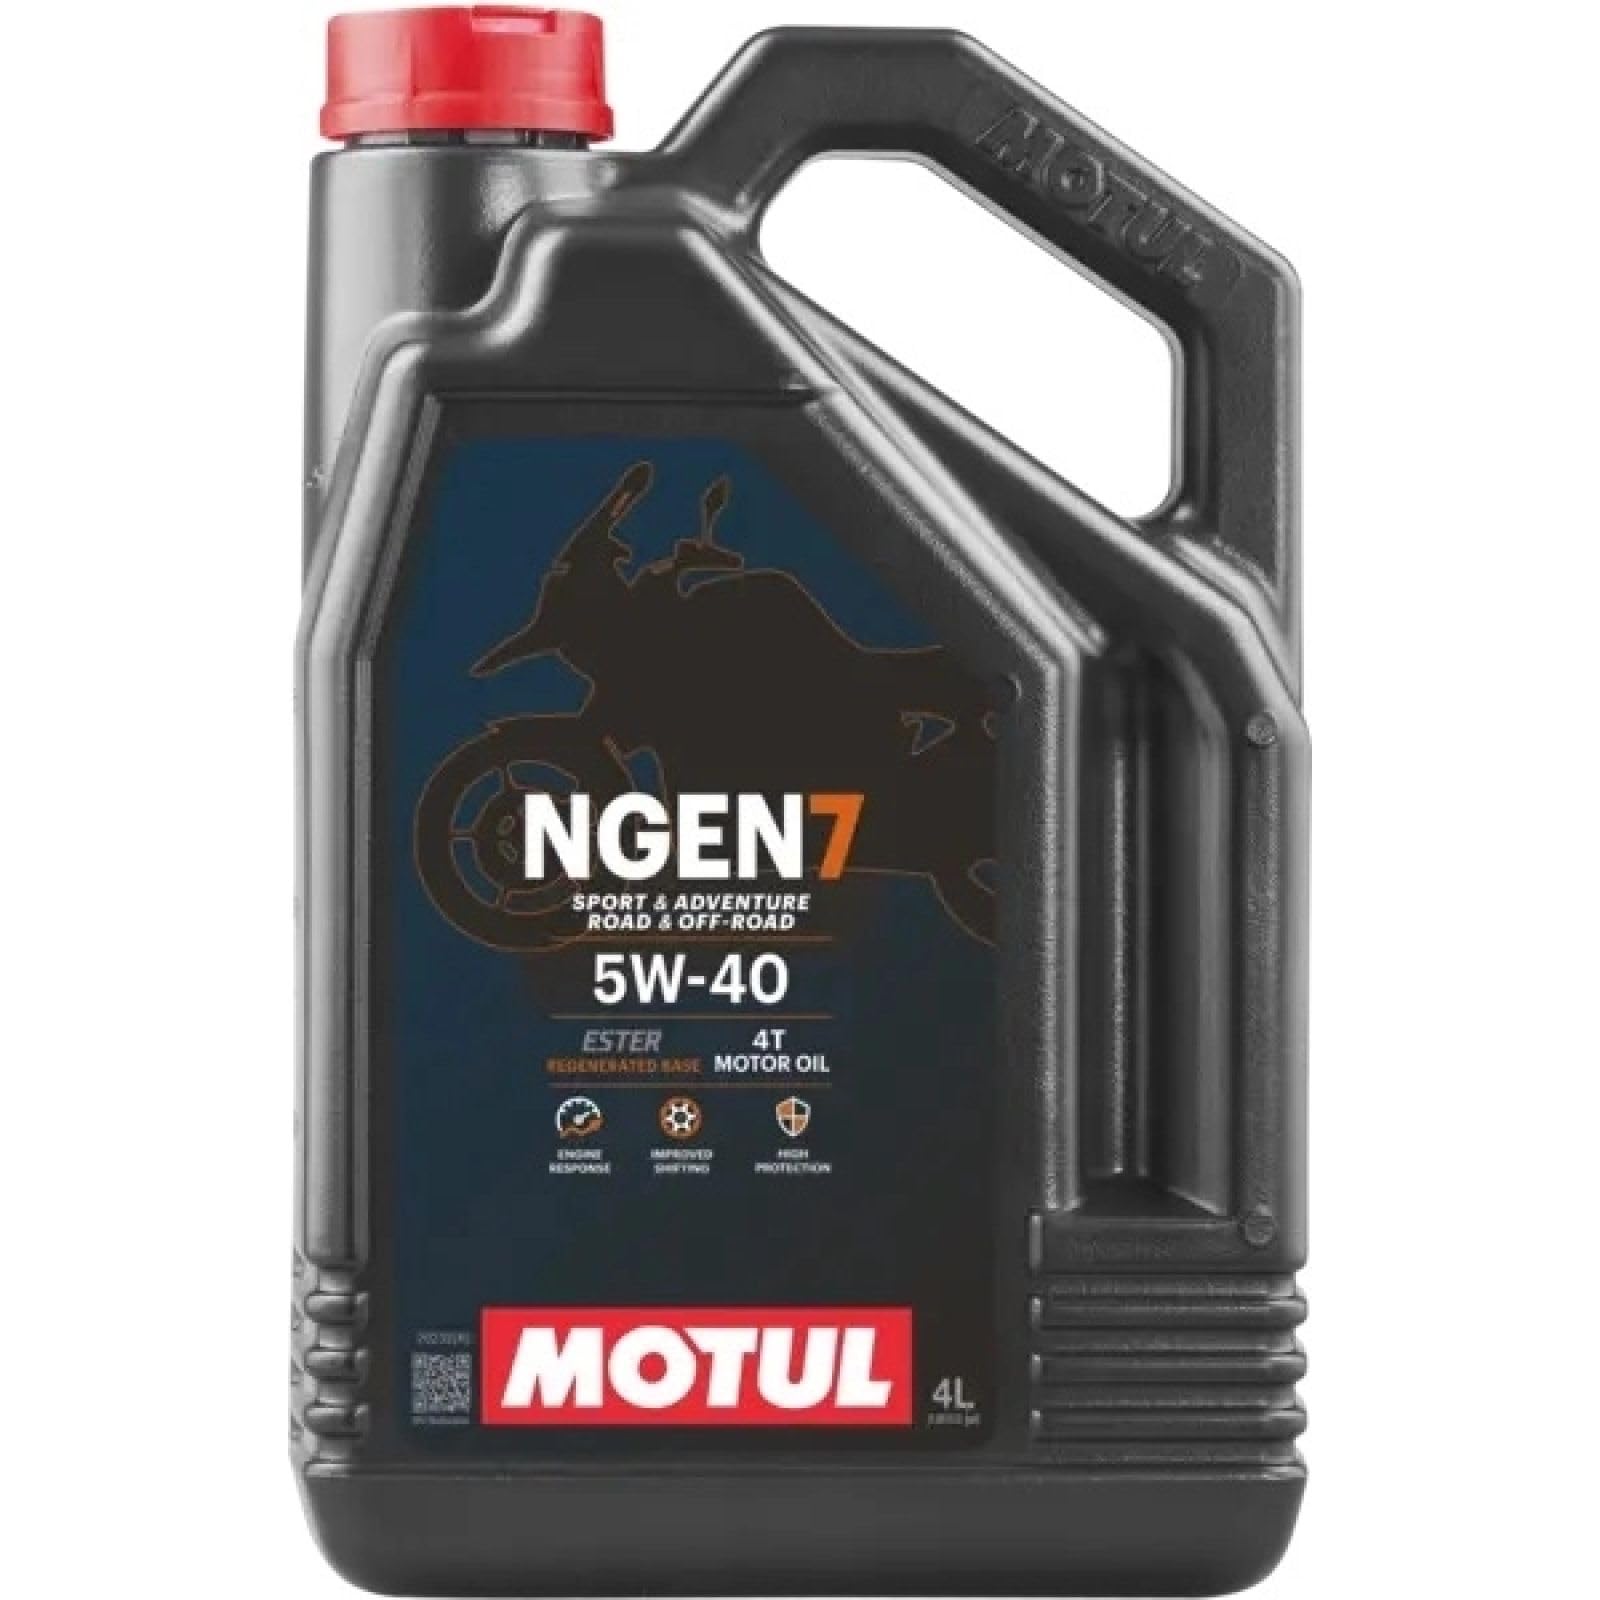 Motul NGEN 7 5W-40 4T 4 Liter von Motul